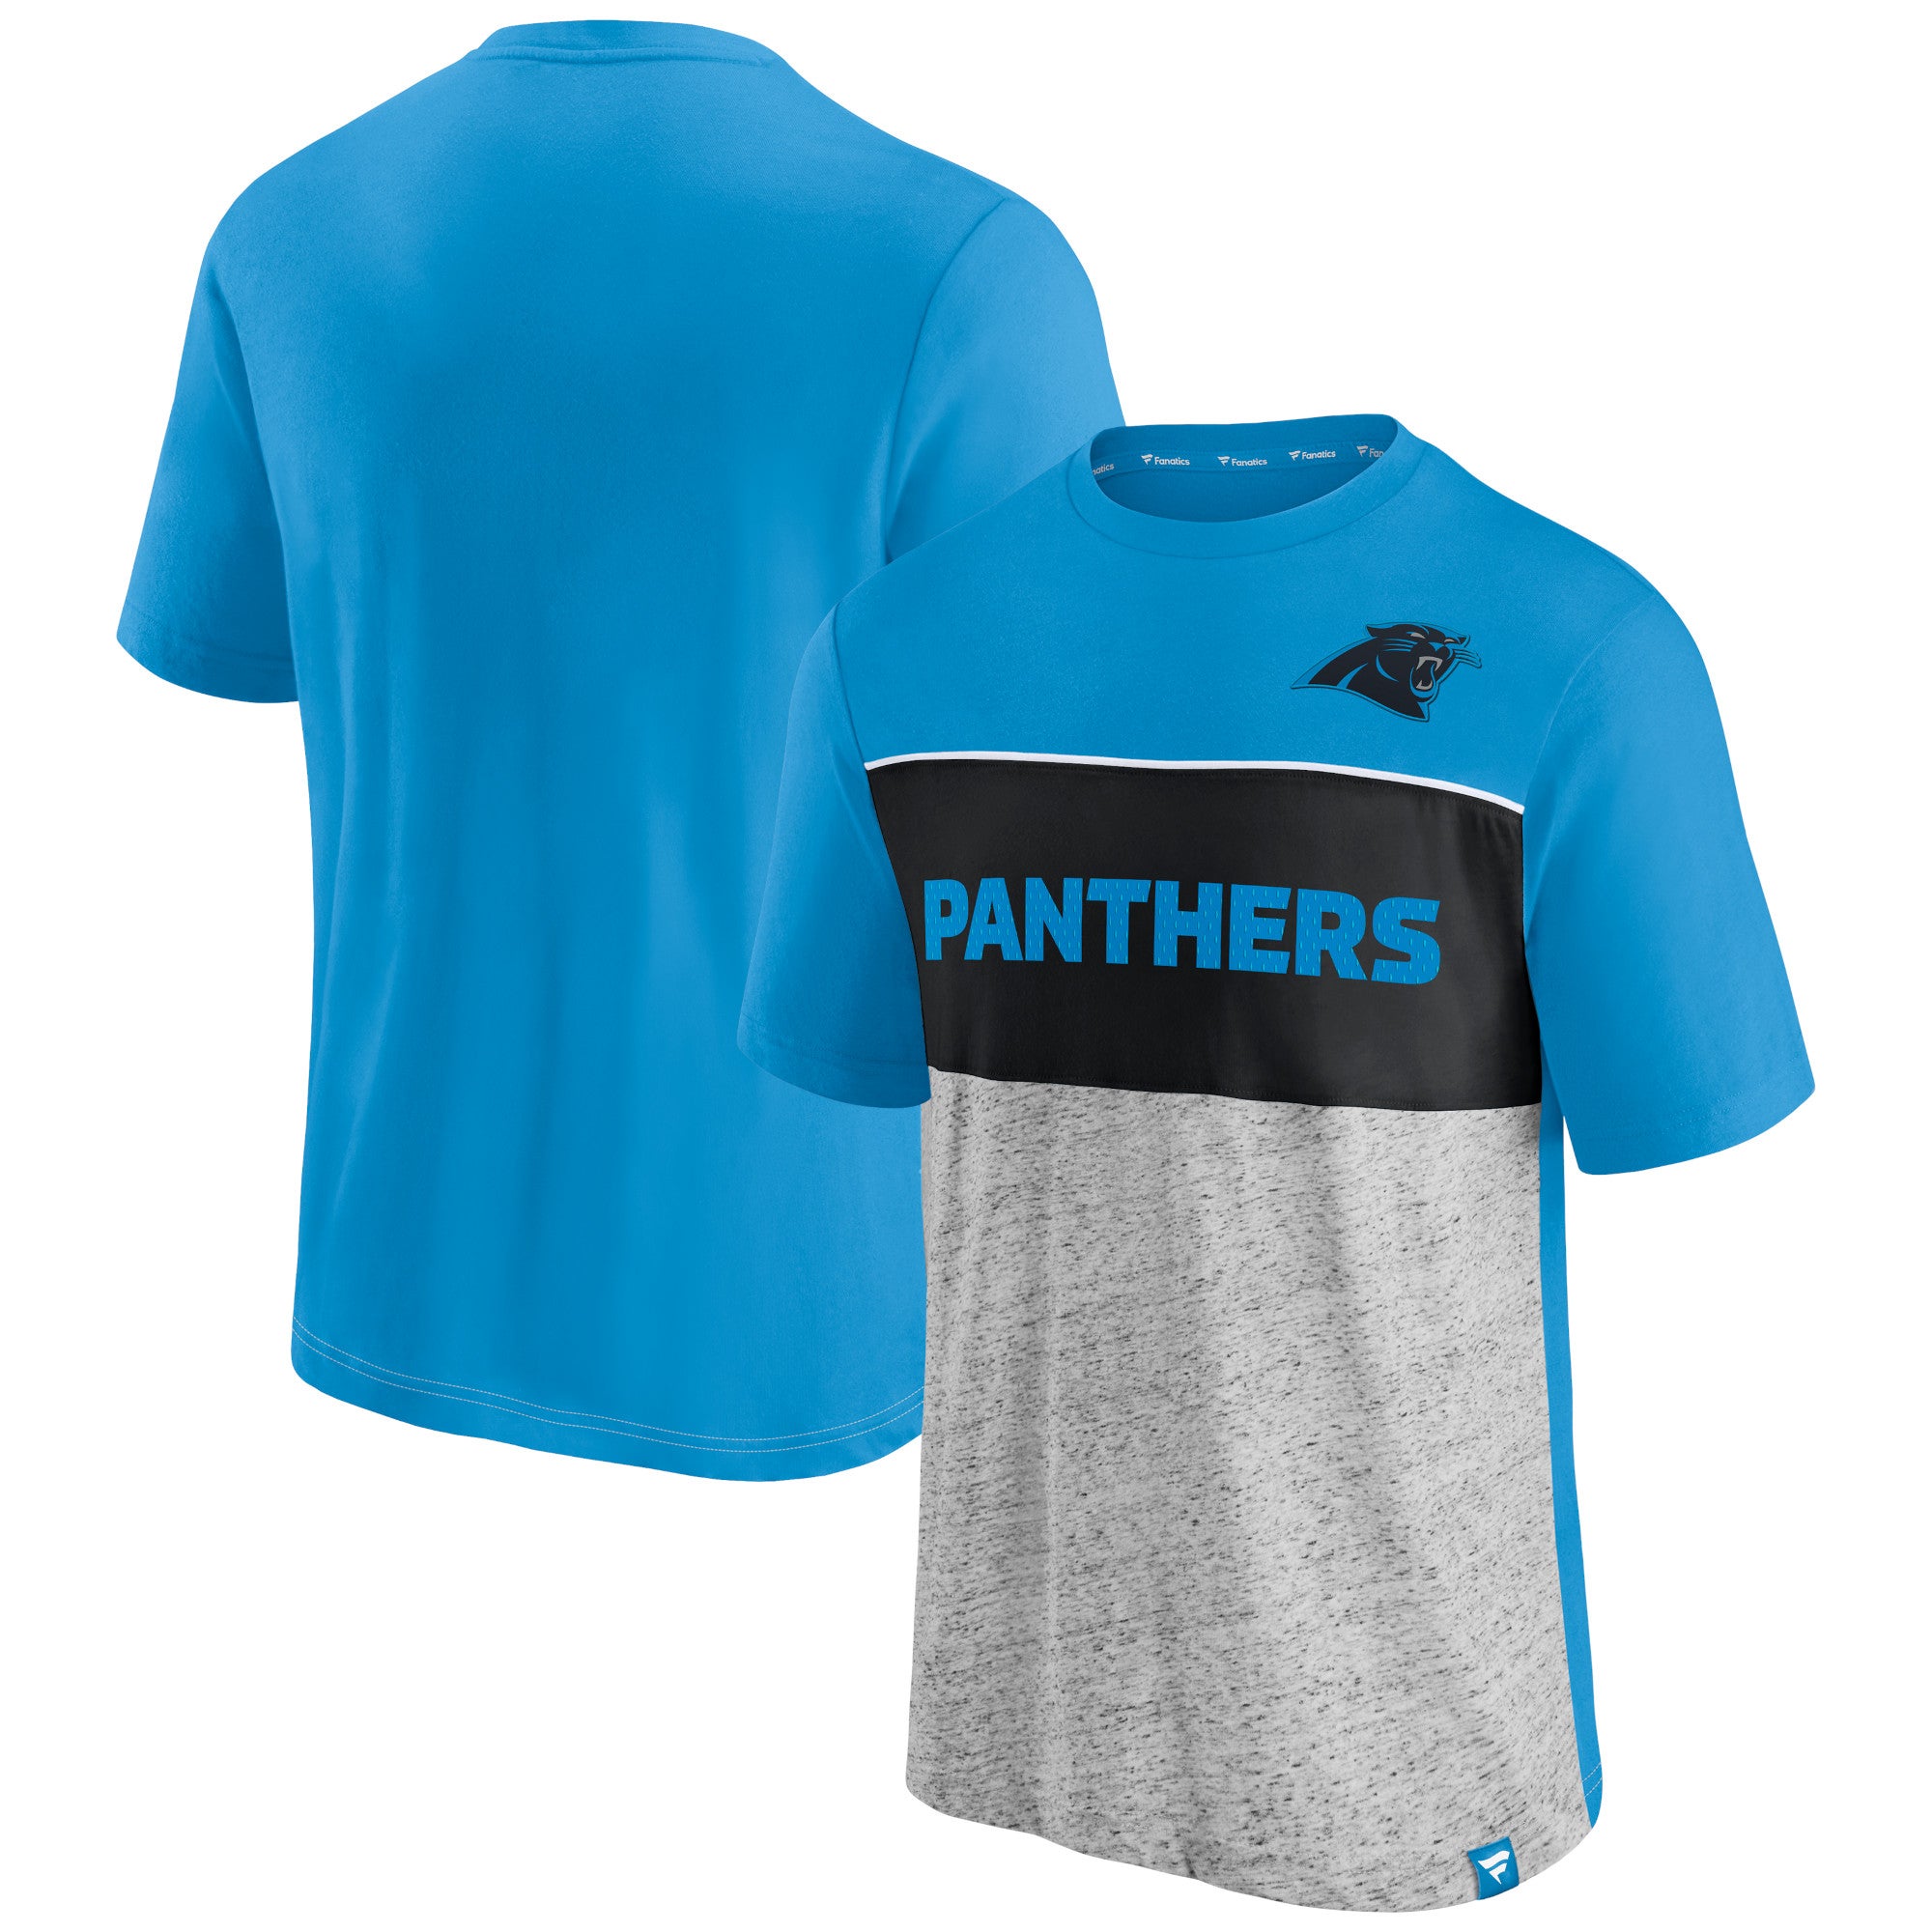 Fanatics Panthers Colorblock T-Shirt - Men's